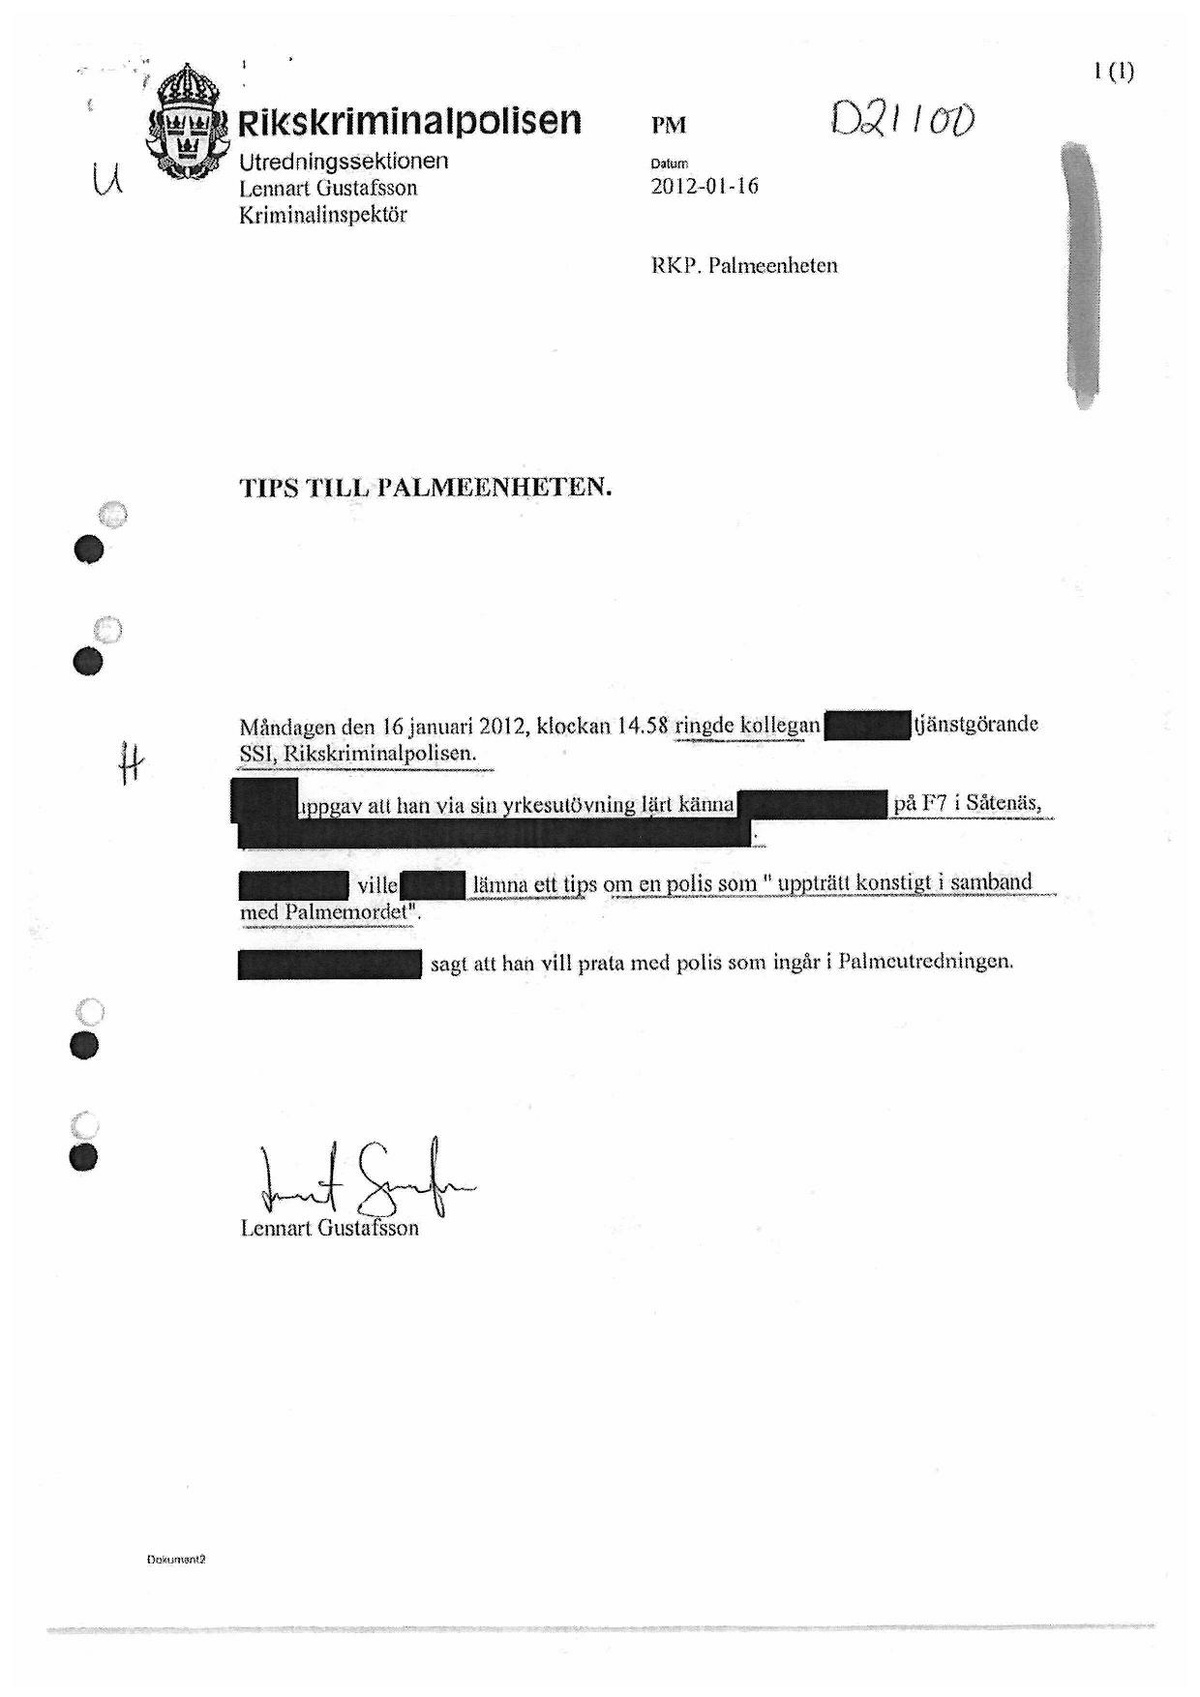 Pol-2012-01-16 D21100-00 Såtenäs.pdf